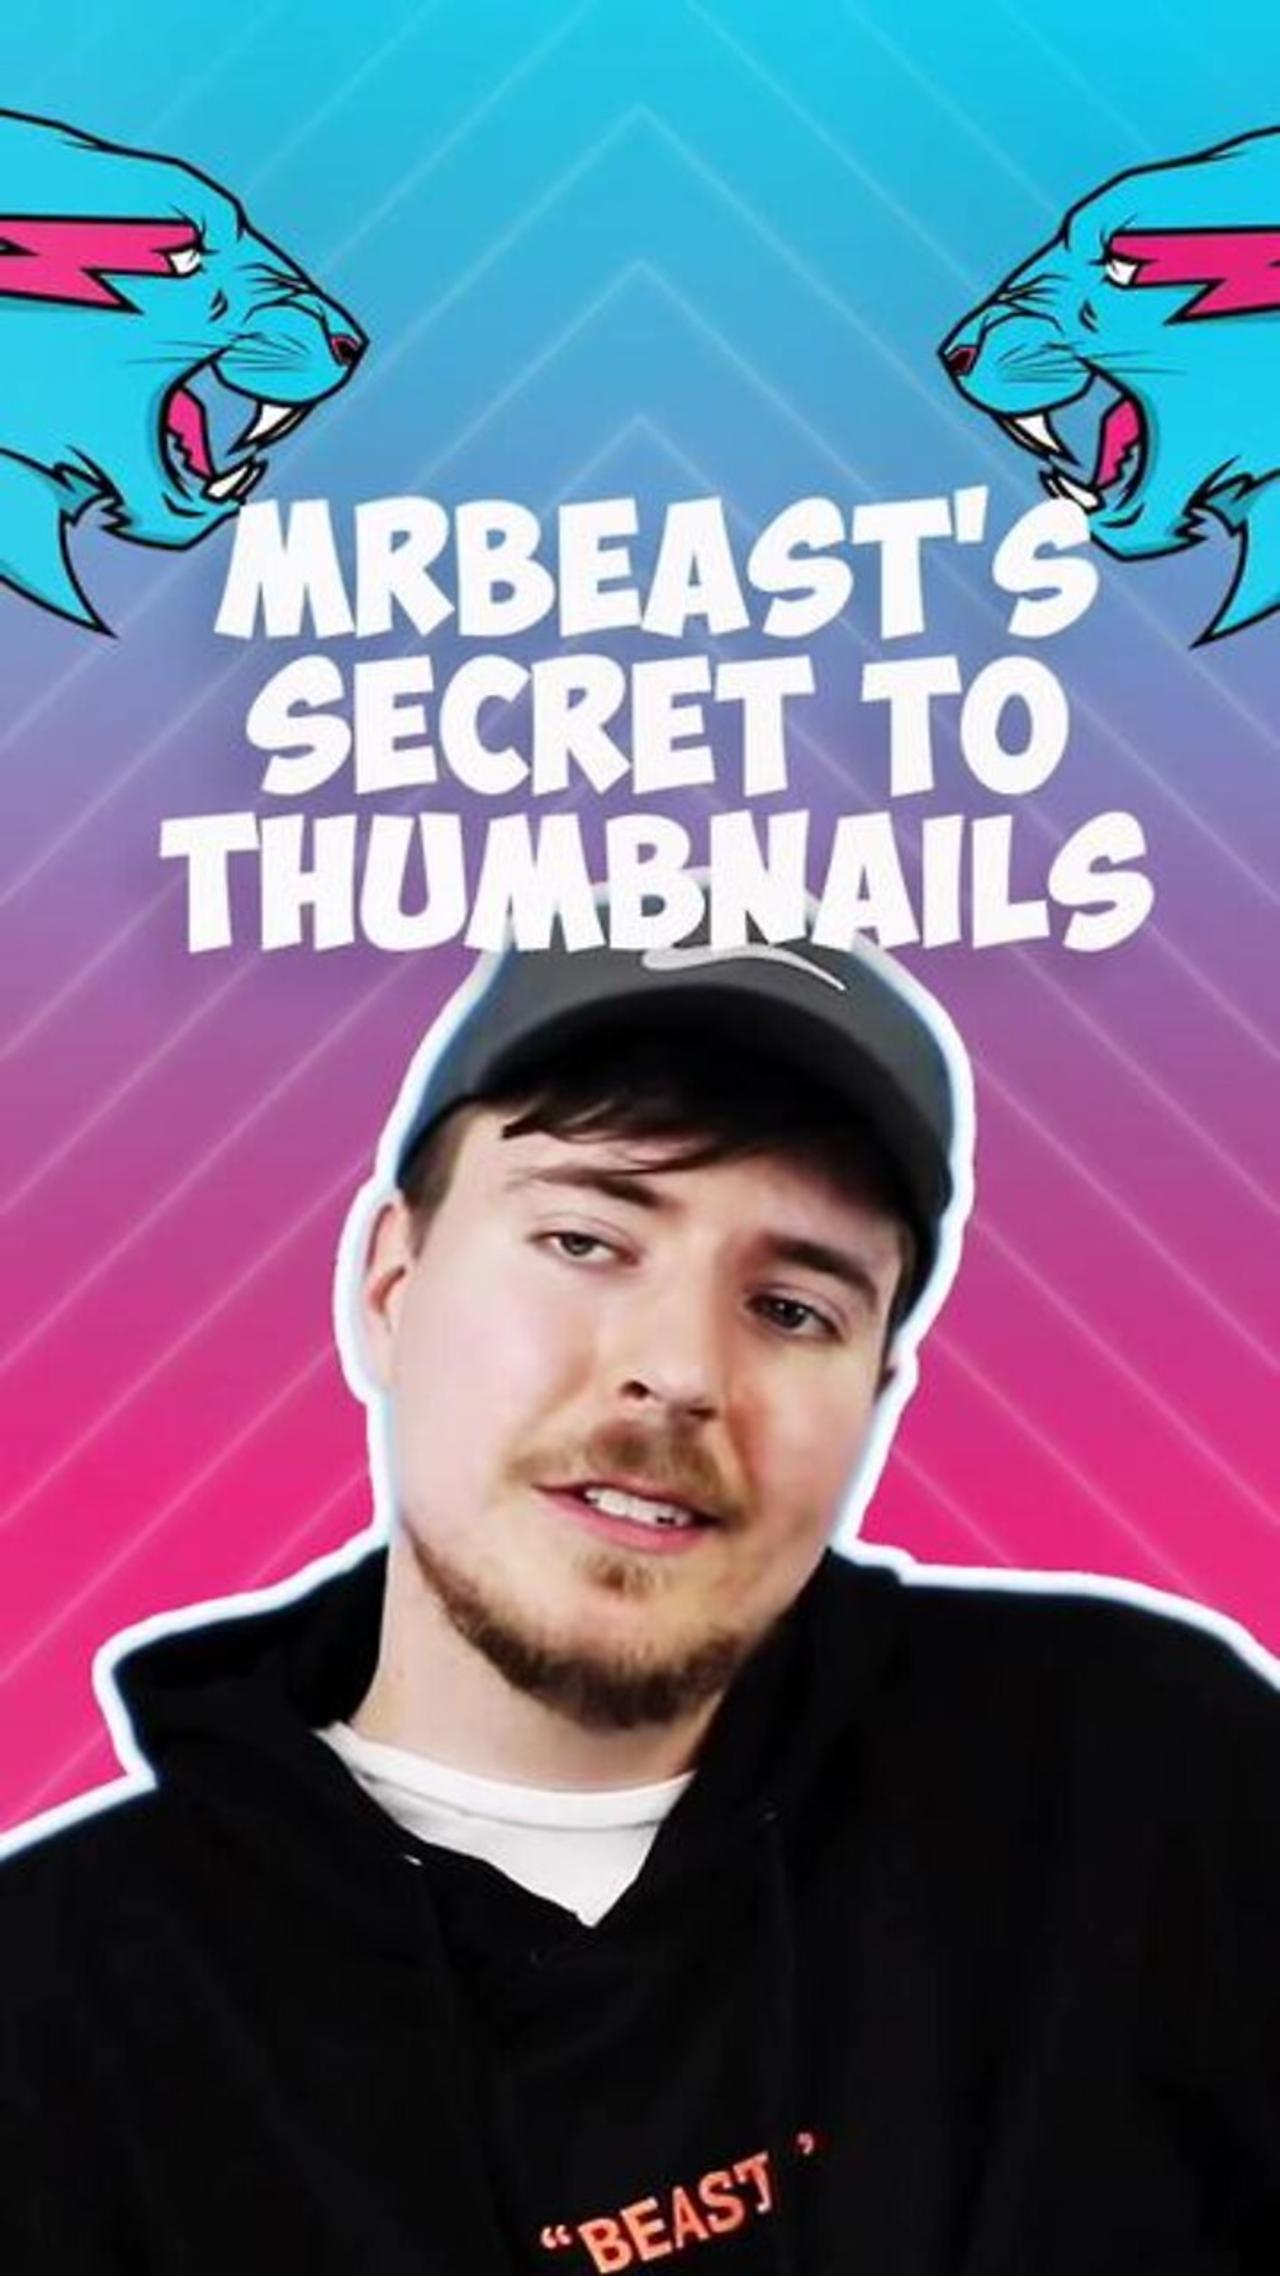 Mr. Beasts Thumbnail Secrets